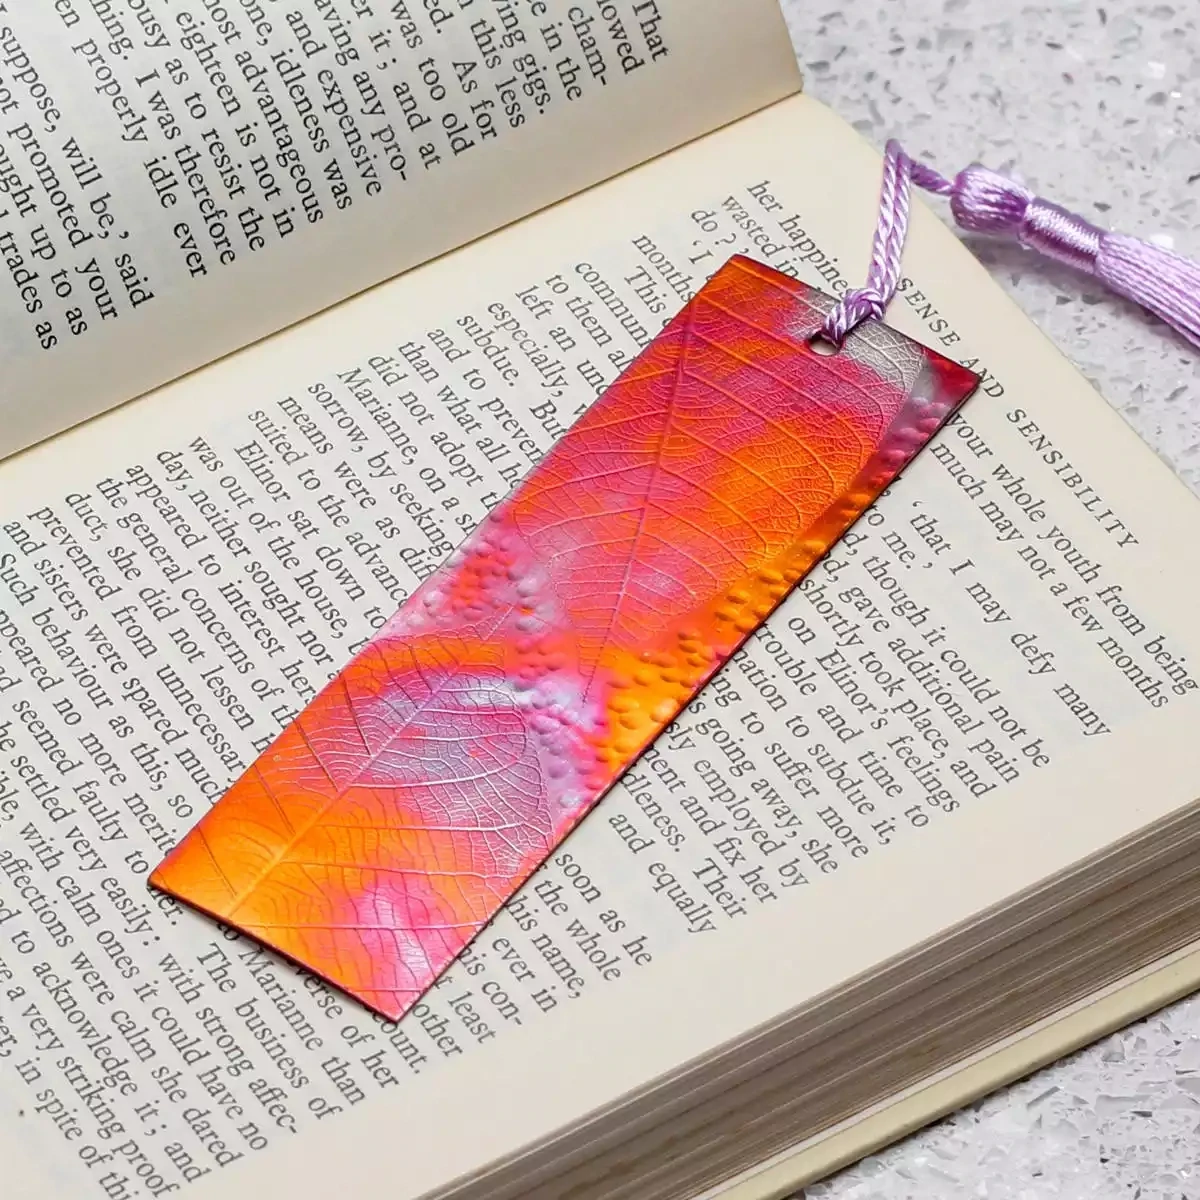 Copper Bookmark - Leaves by Jim Stringer